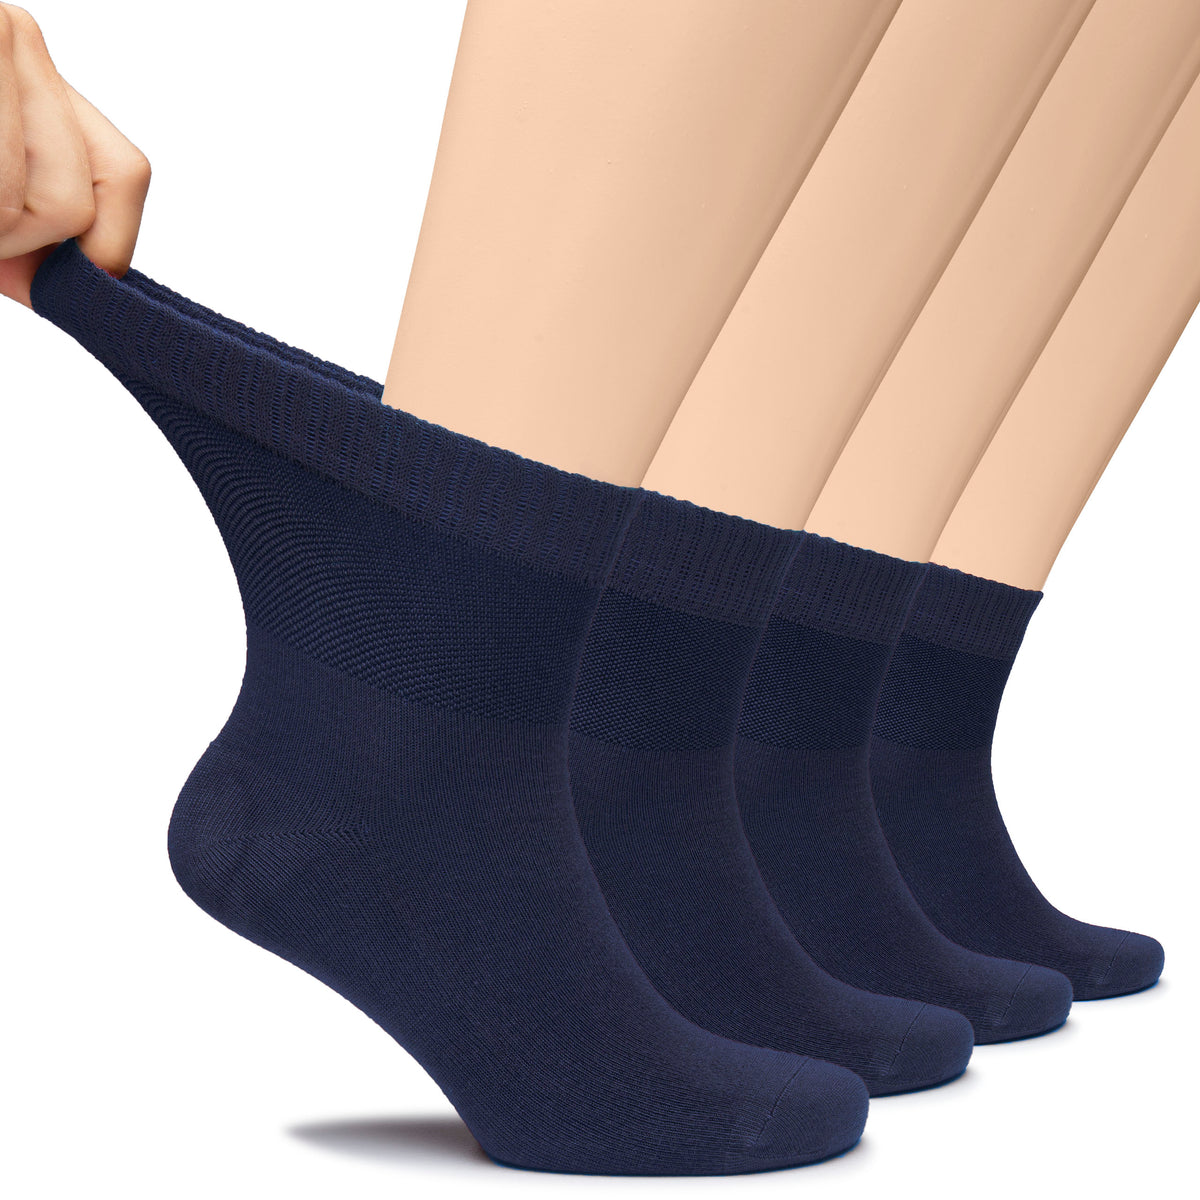 Hugh Ugoli Lightweight Men's Diabetic Ankle Socks Bamboo Thin Socks Seamless Toe and Non-Binding Top, 4 Pairs, Shoe Size 8-11/11-13 | Shoe Size: 8-11 | Navy Blue